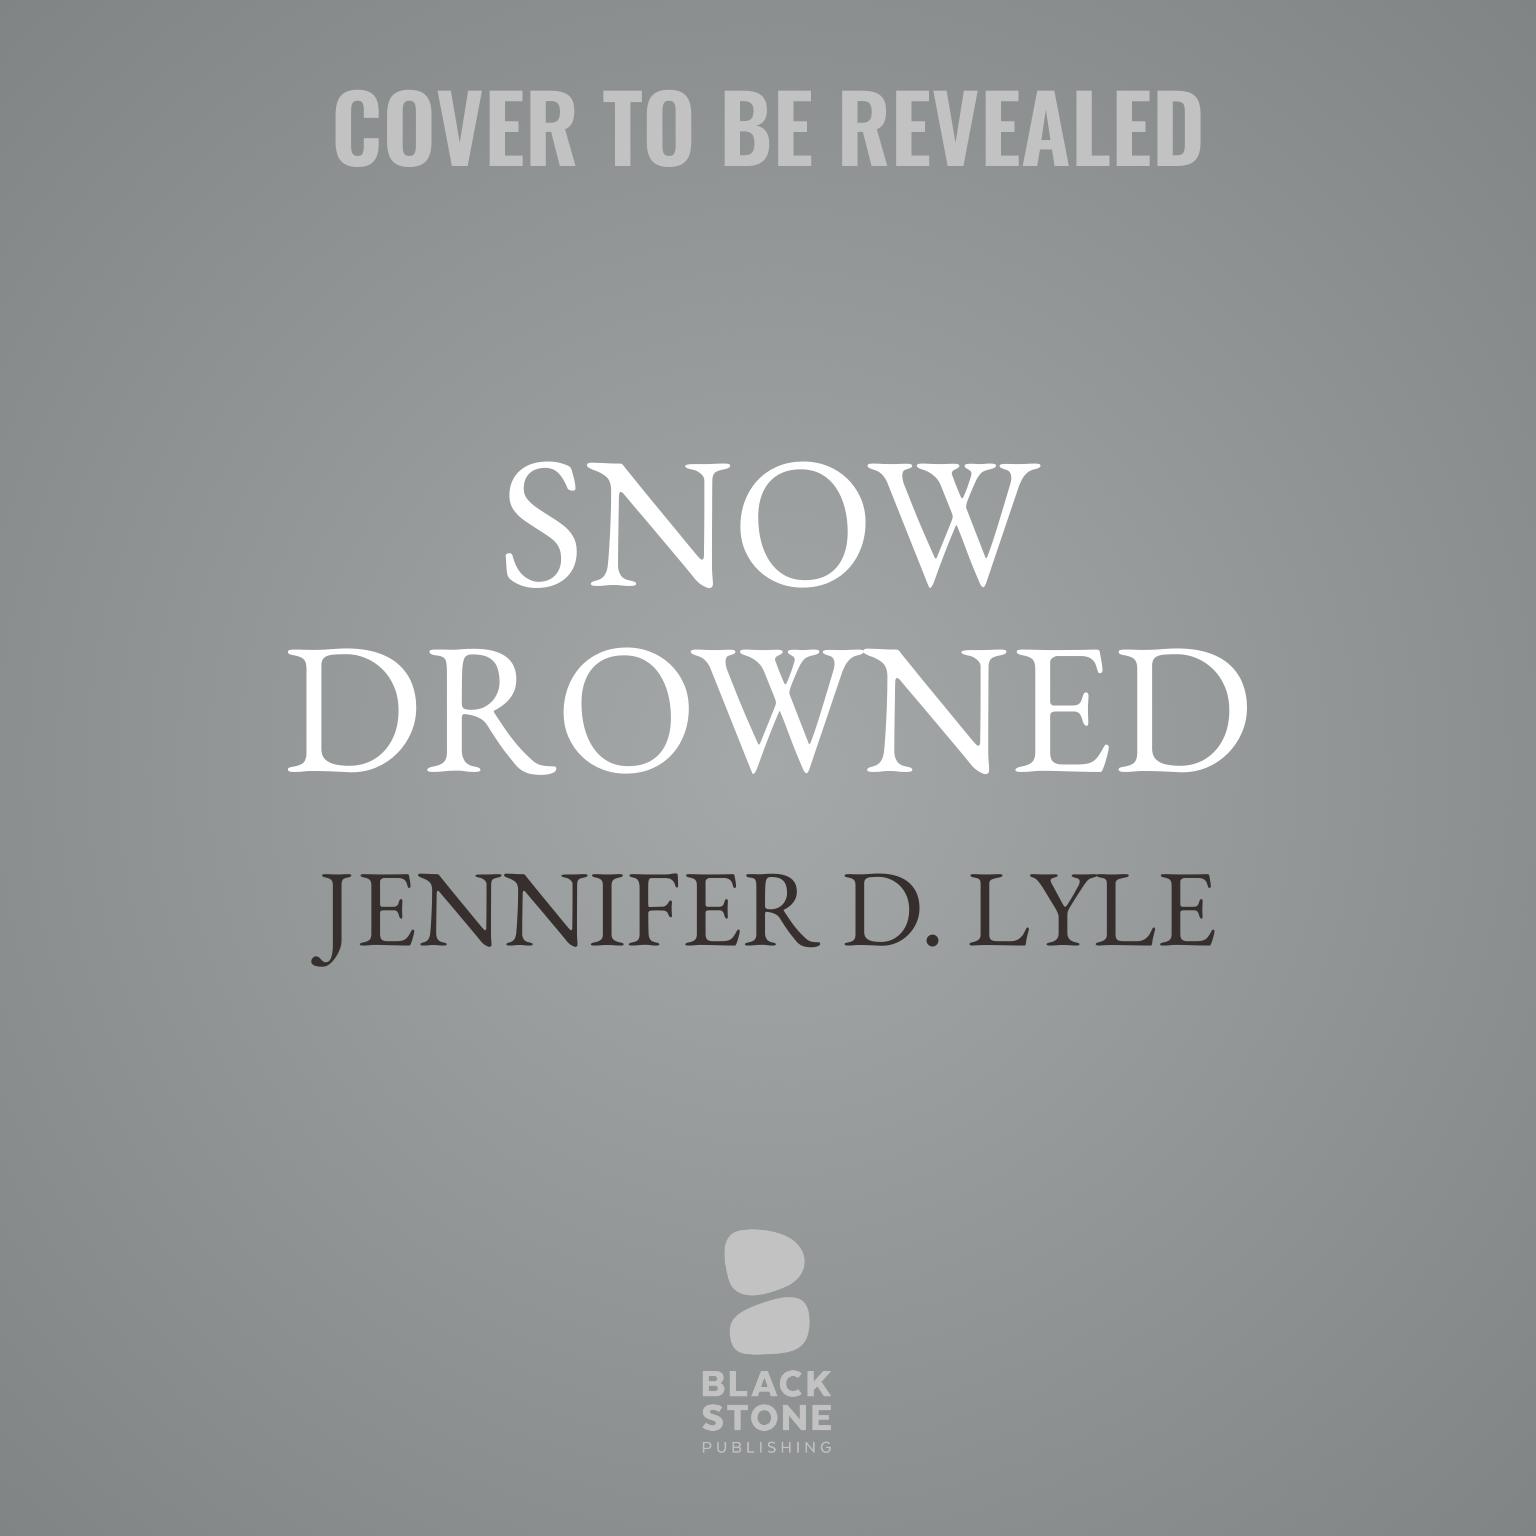 Snow Drowned Audiobook, by Jennifer D. Lyle